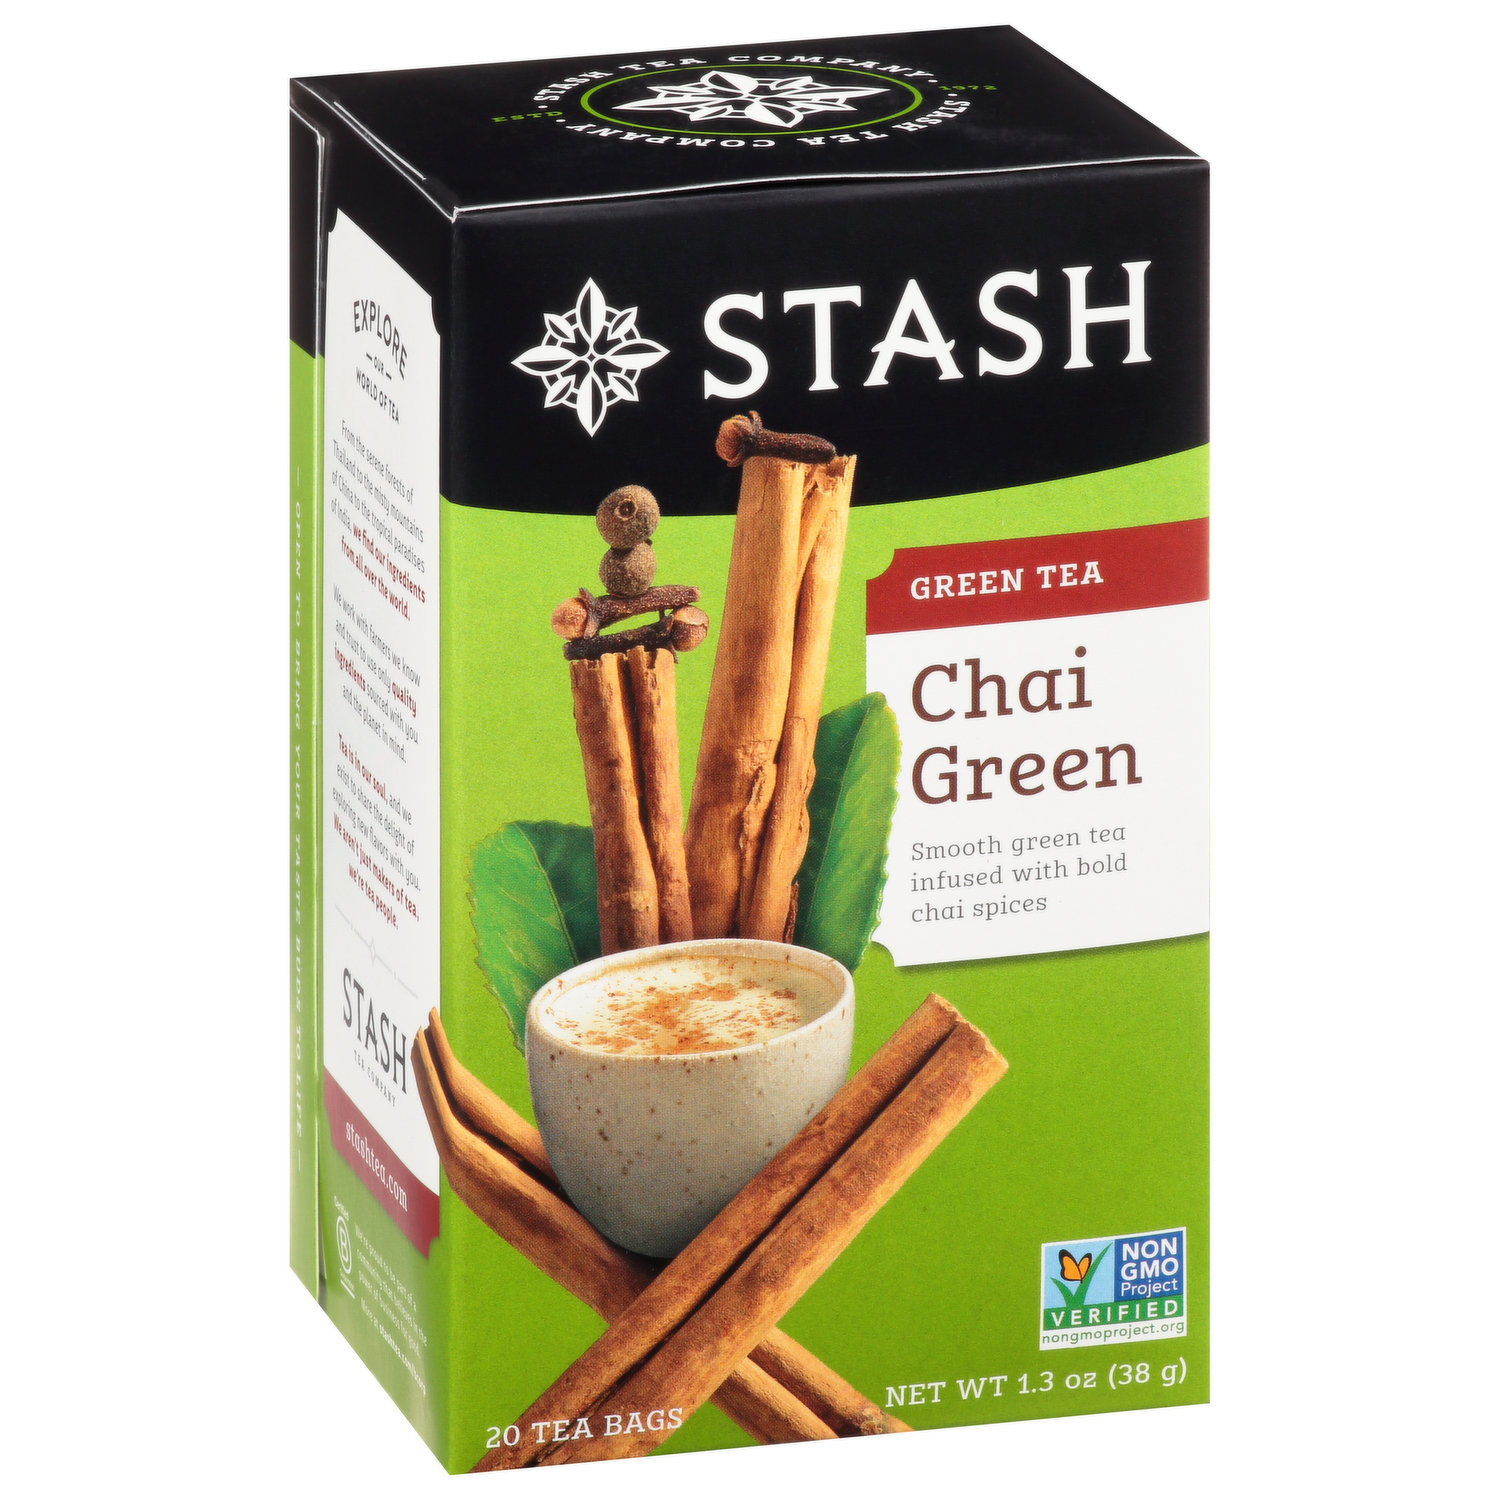 Stash Green Tea, Chai Green, Tea Bags